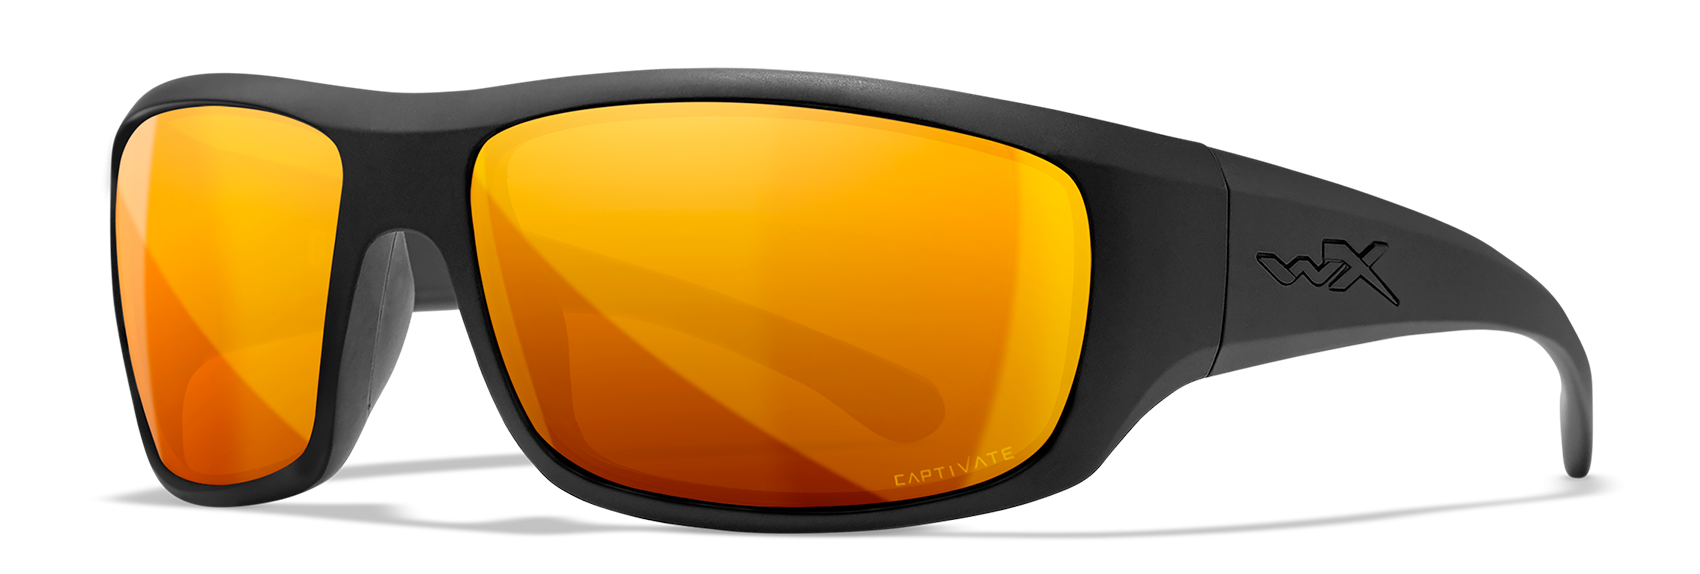 Wiley X WX Omega Bronze Mirror Polycarbonate Sunglasses